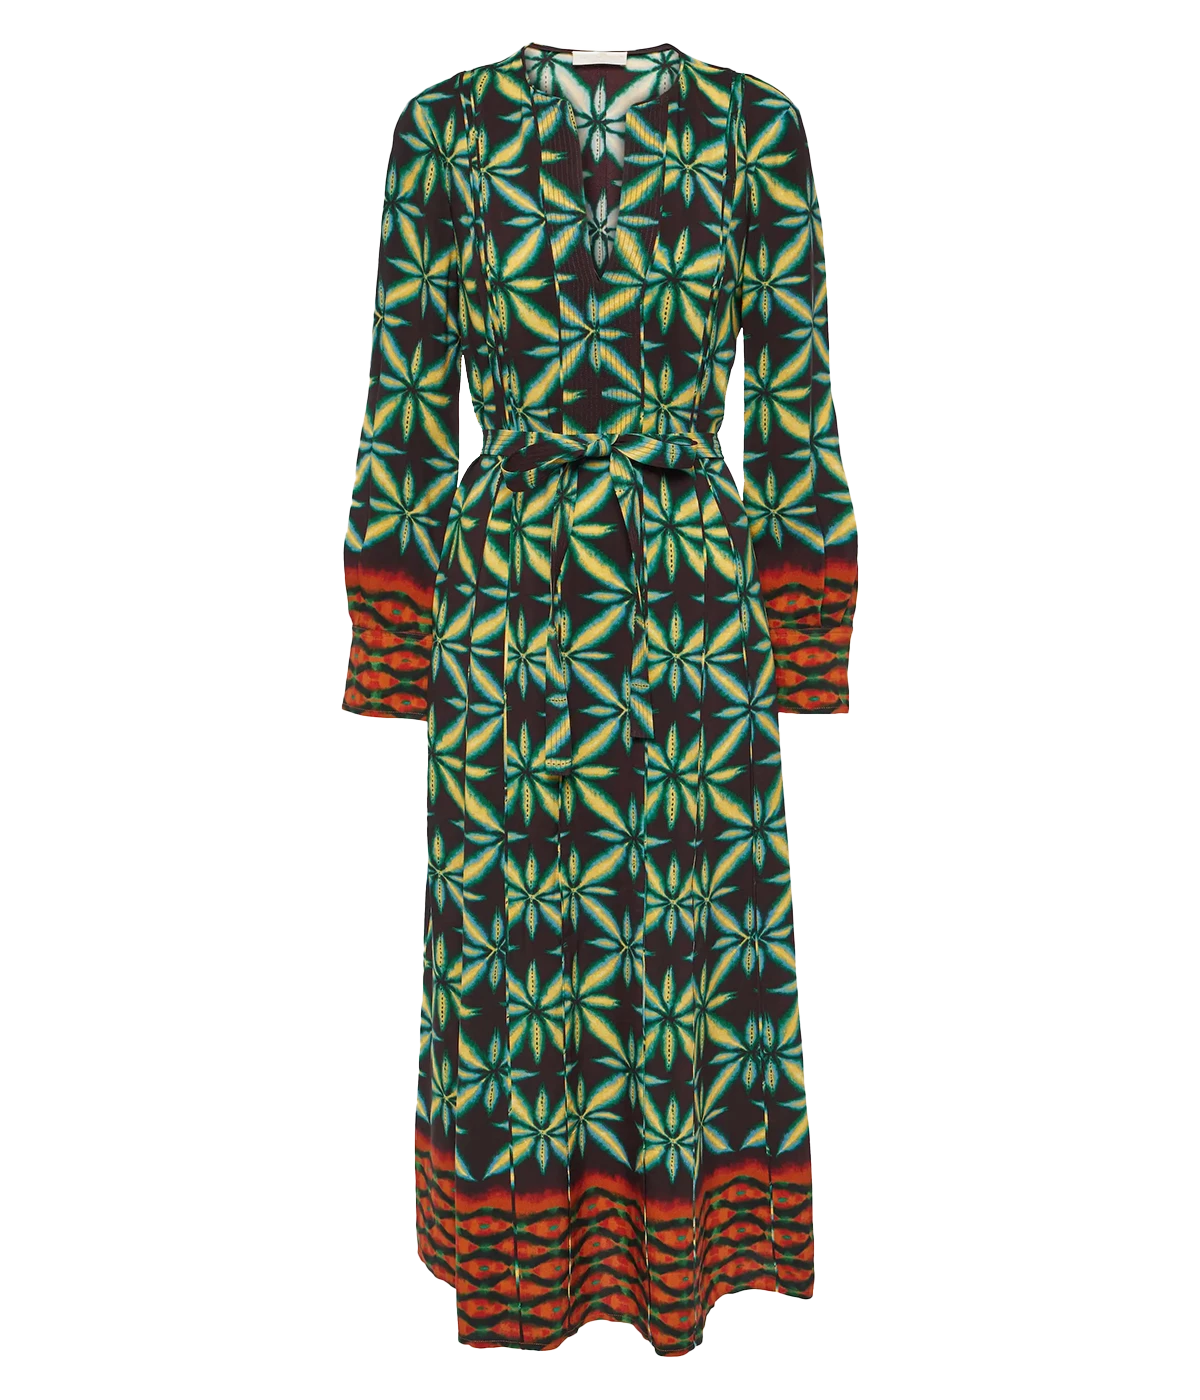 Asilia Dress in Olivinite